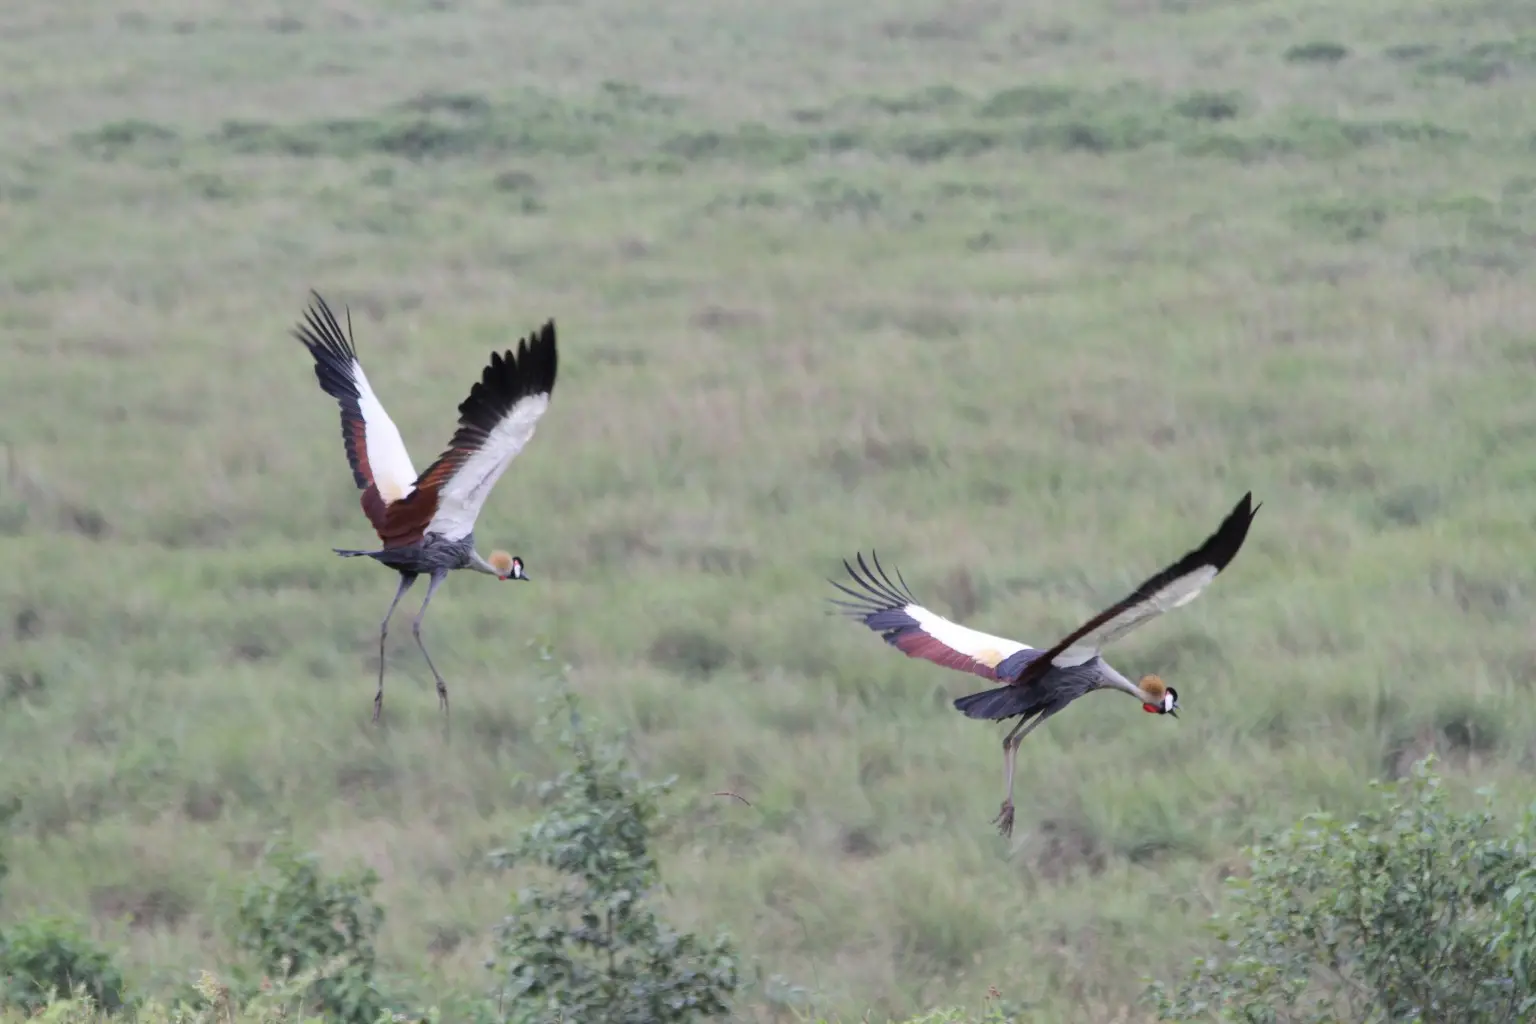 Free range Grey Crowned Cranes flying near Rughezi Marsh